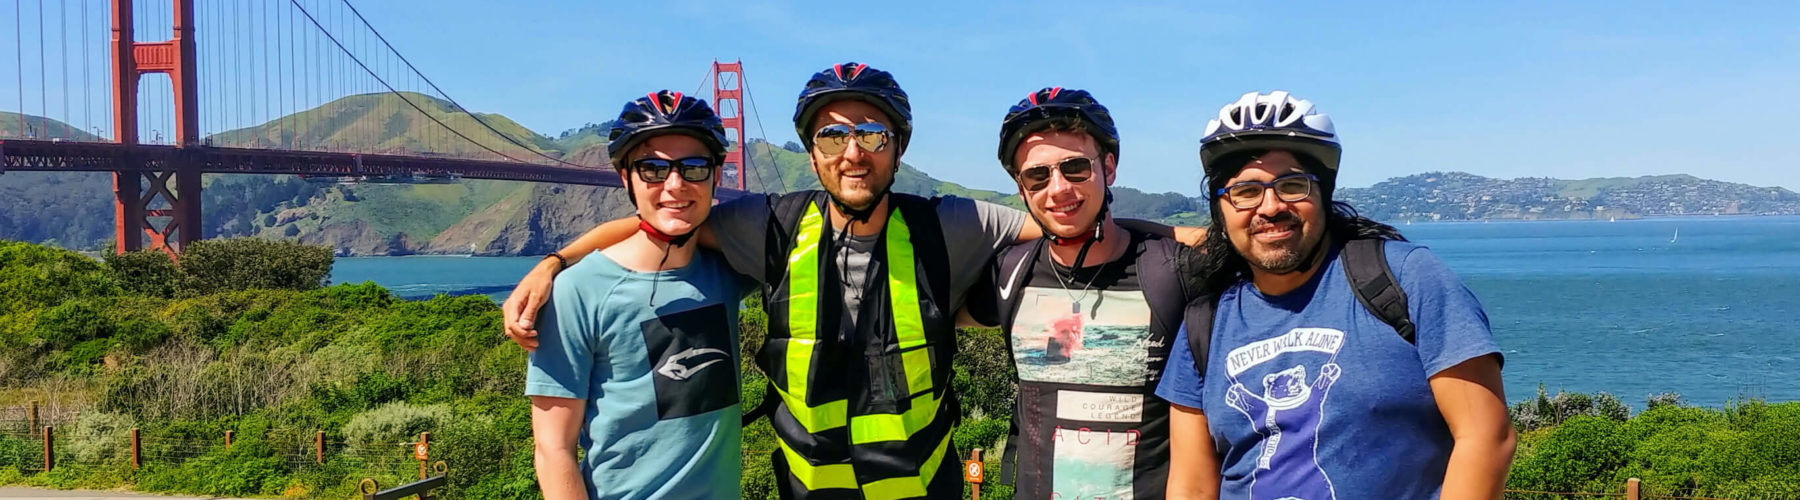 bay-city-bike-private-group-bike-tour-hero-1